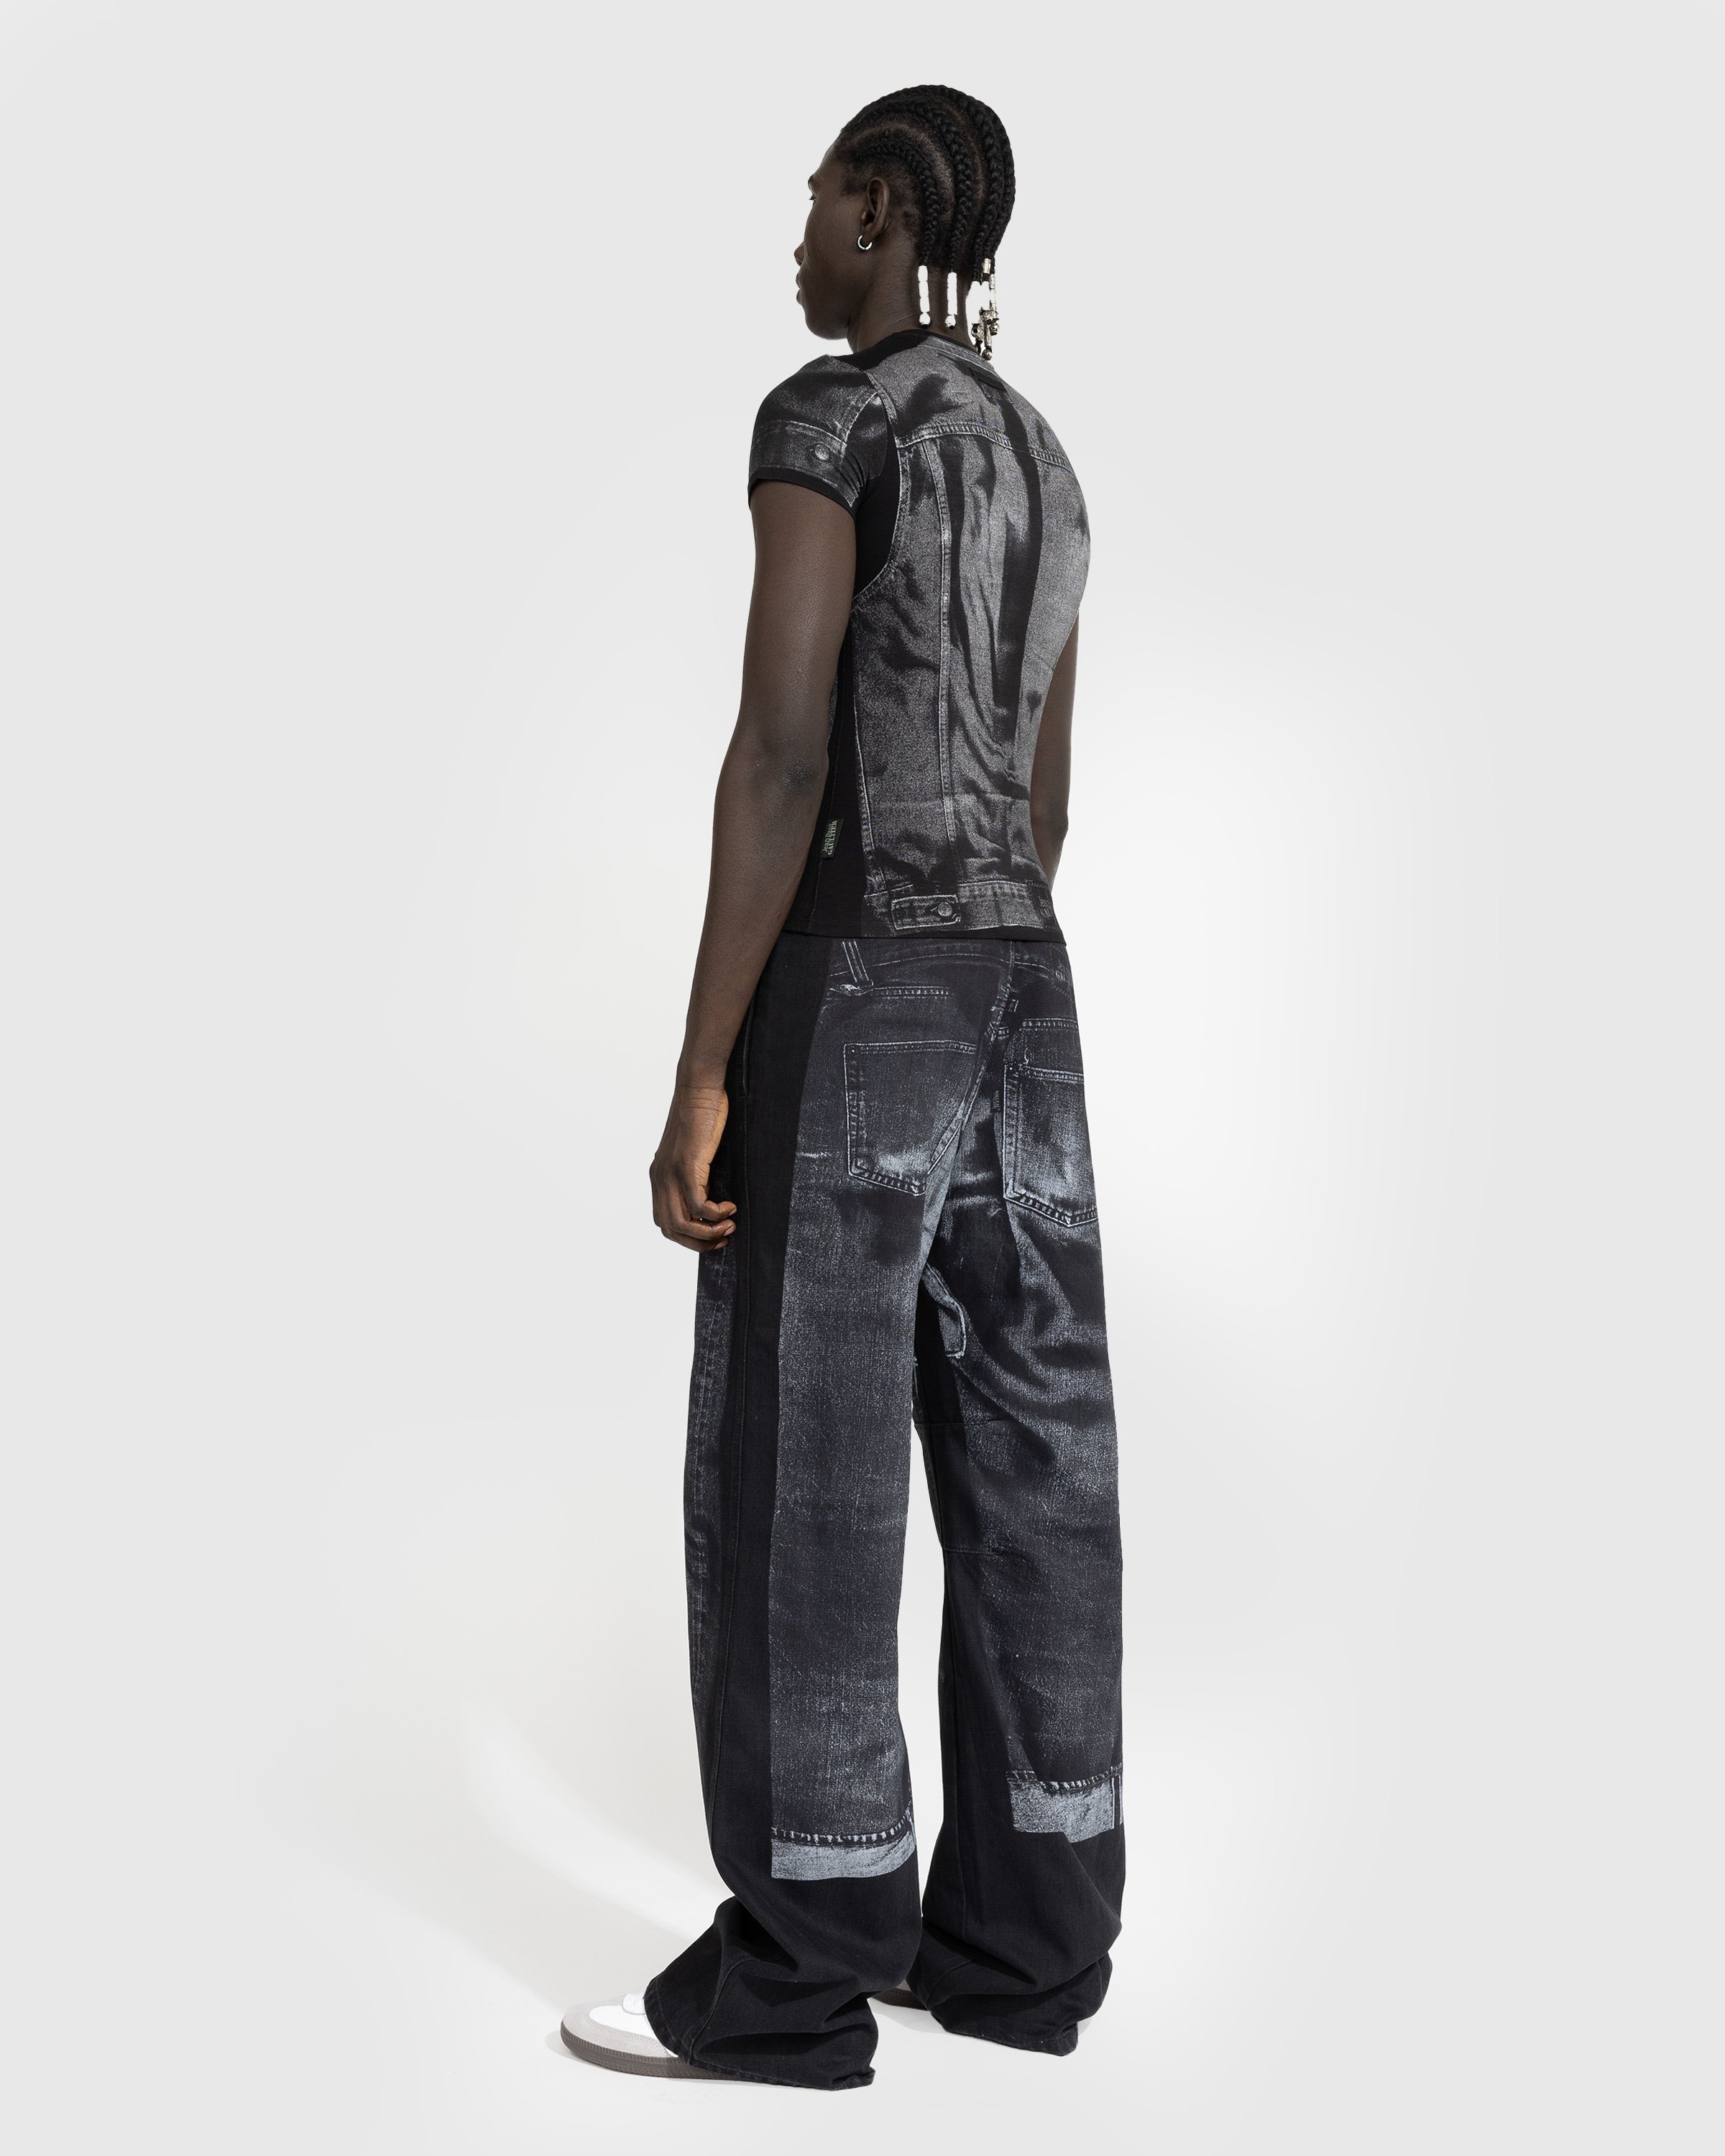 Jean Paul Gaultier - Denim Trompe L'oeil T-Shirt Black/Gray - Clothing - Black - Image 3